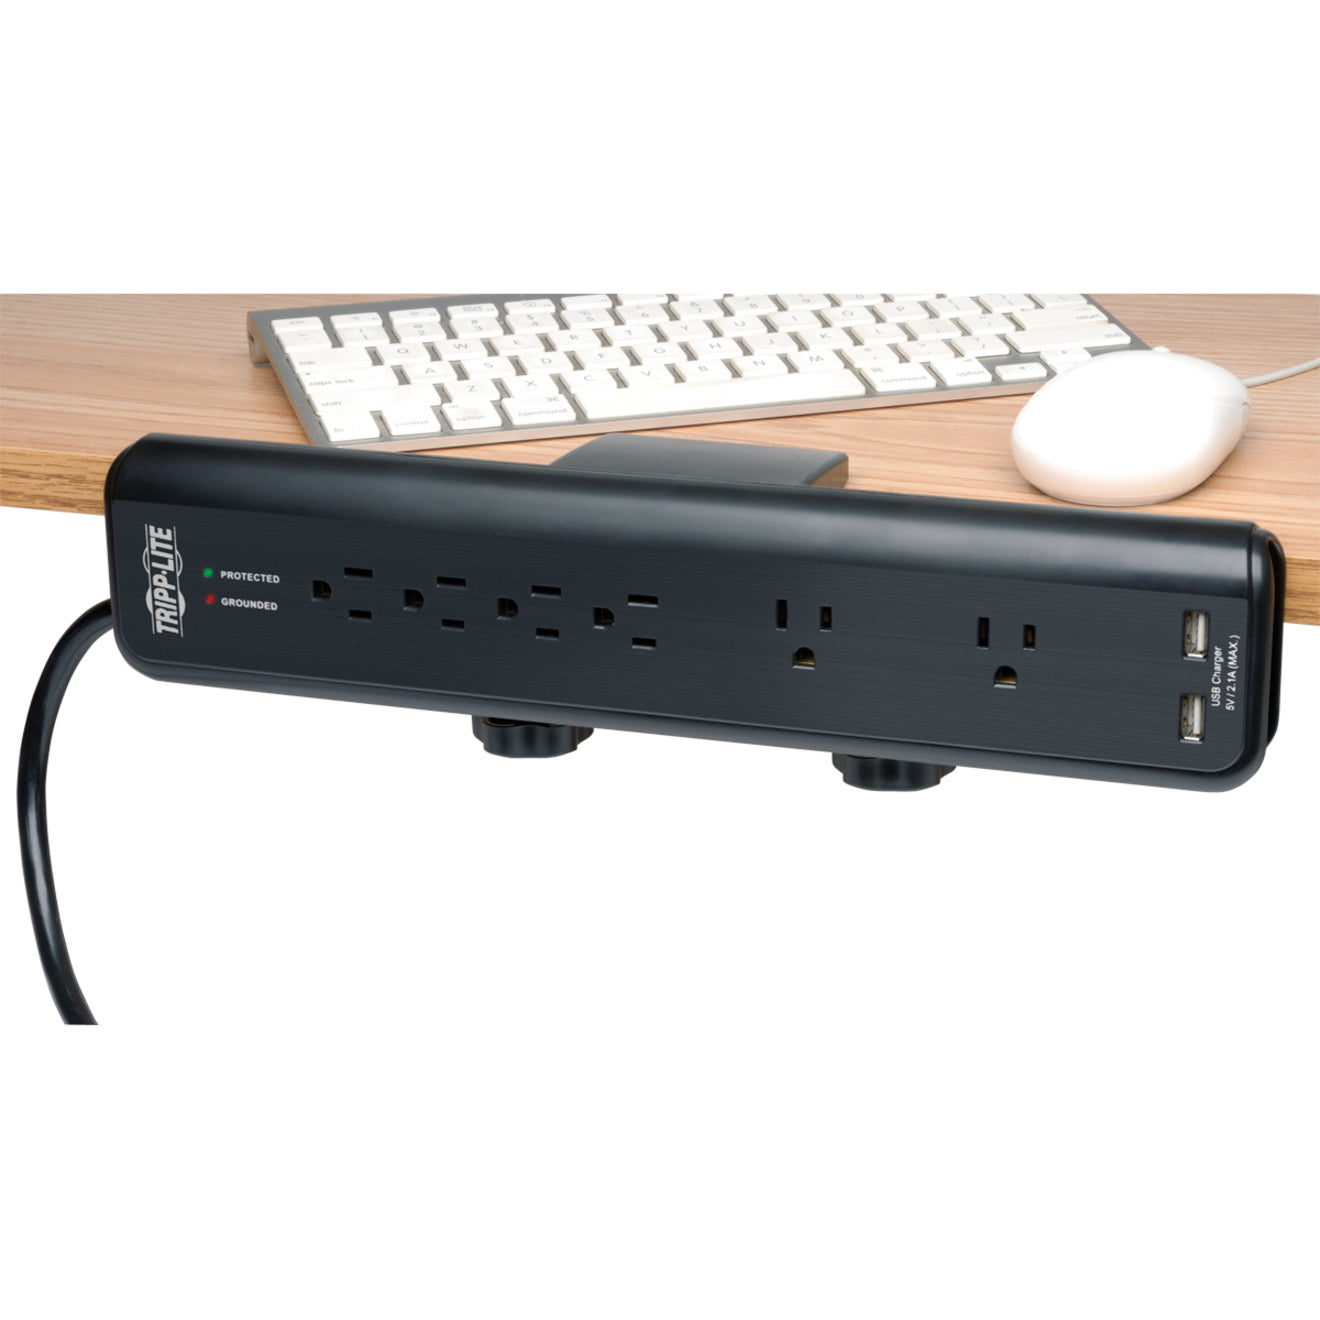 Tripp Lite TLP606DMUSB 6-outlet Surge Protector, 2 USB, 2100J, Fast Charging, Diagnostic LED